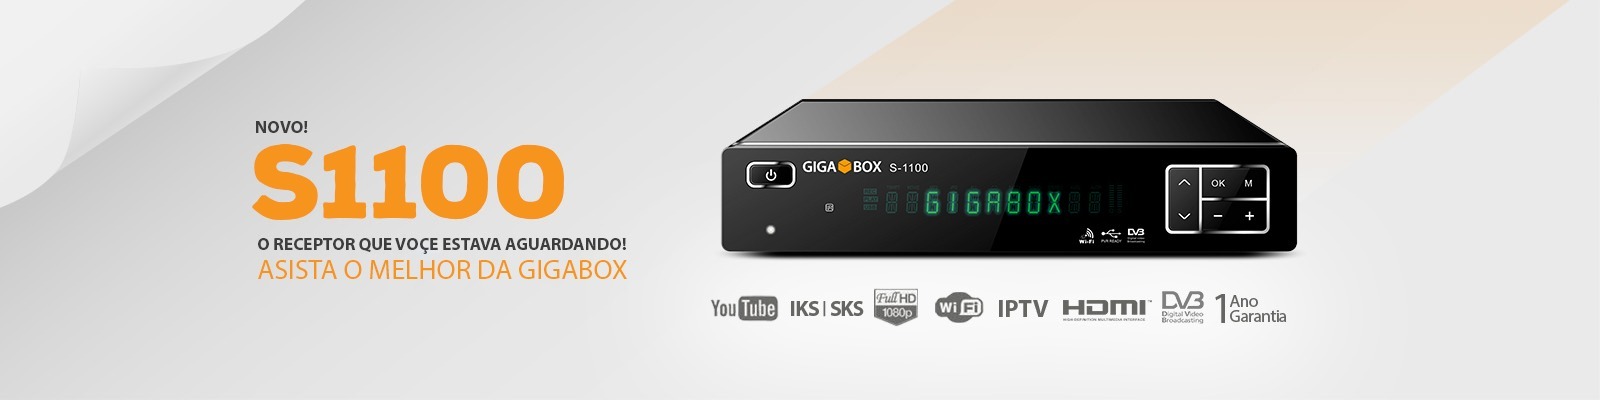  GIGABOX NUEVO S1100 SKS IKS HD Wifi